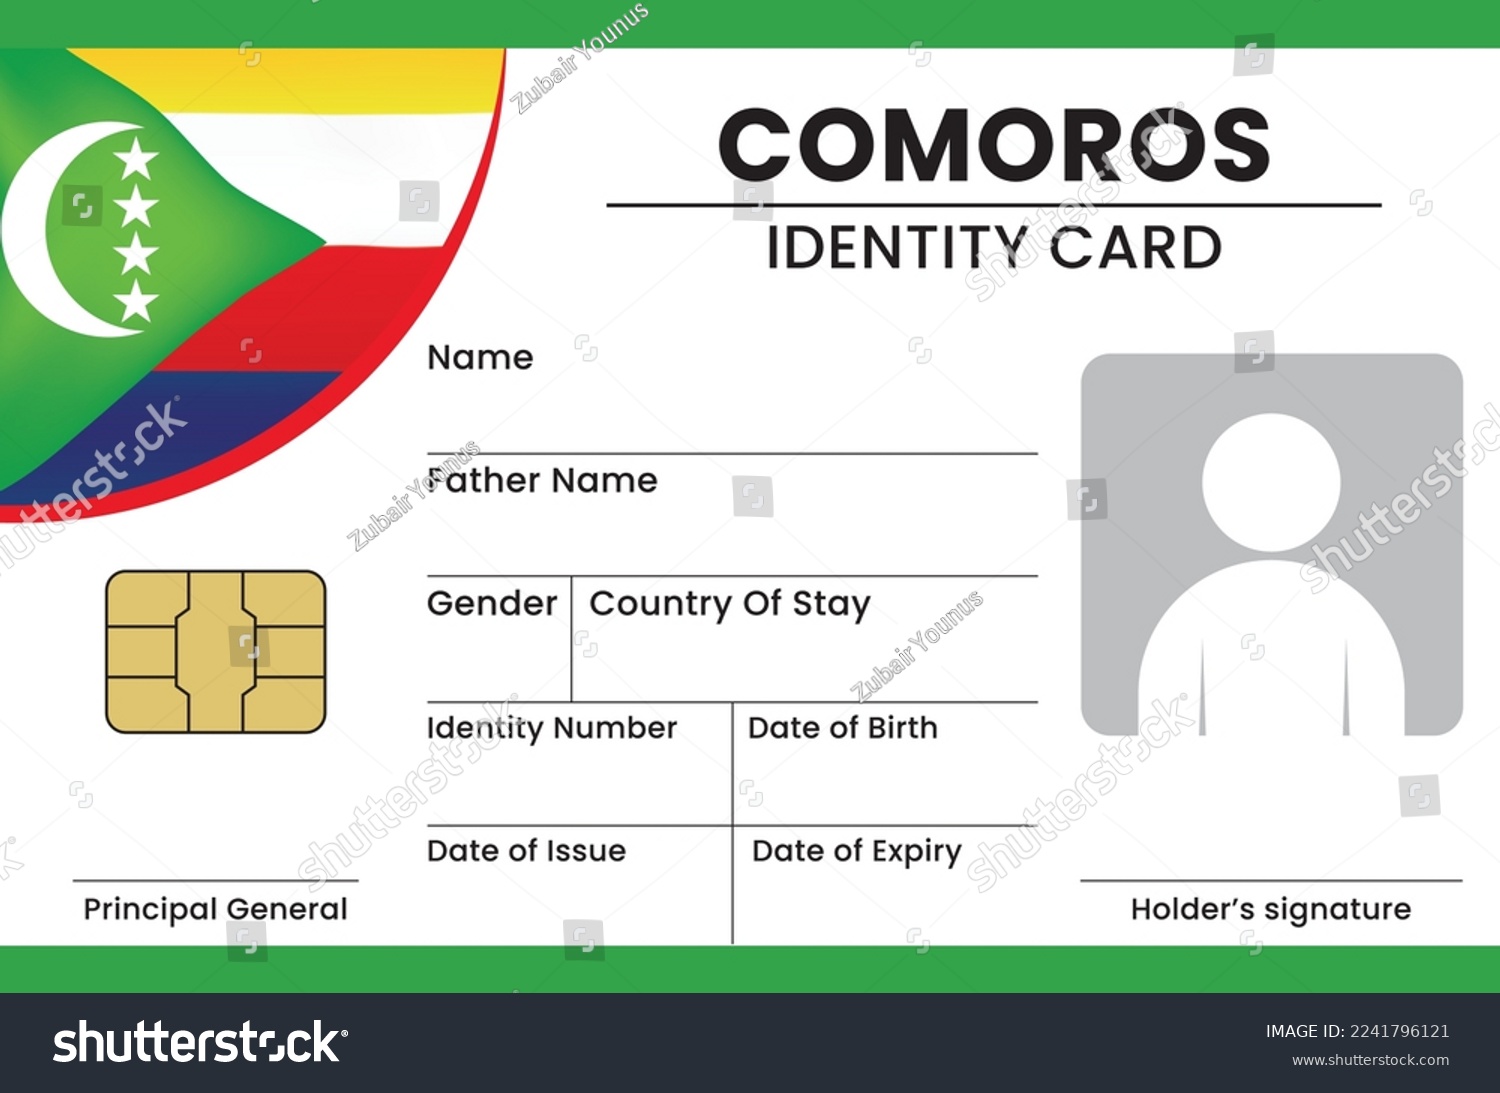 Comoros fake id card